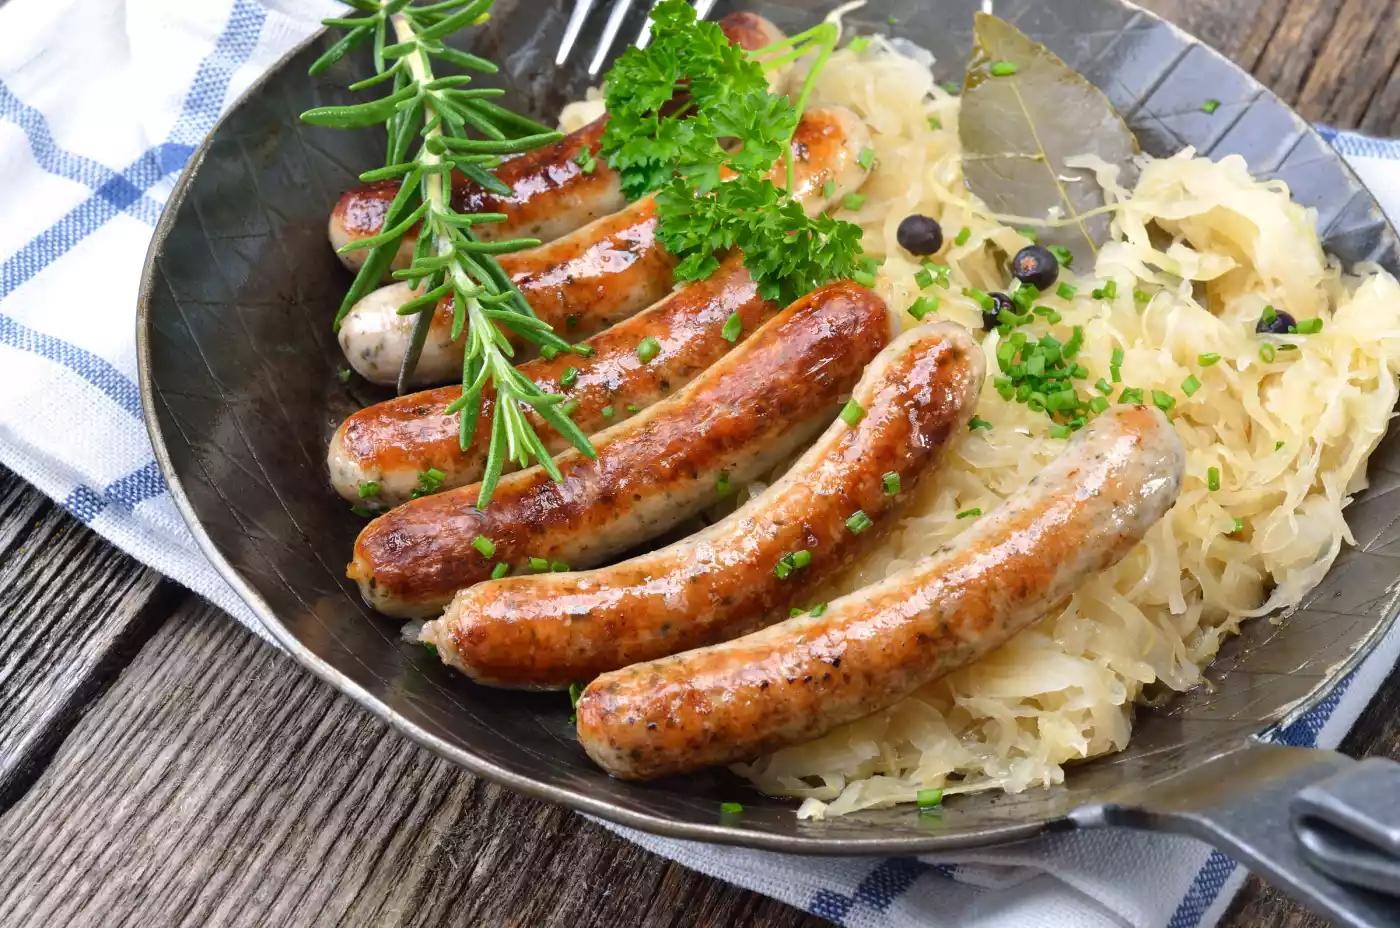 german smoked sausage - What is the most popular German sausage